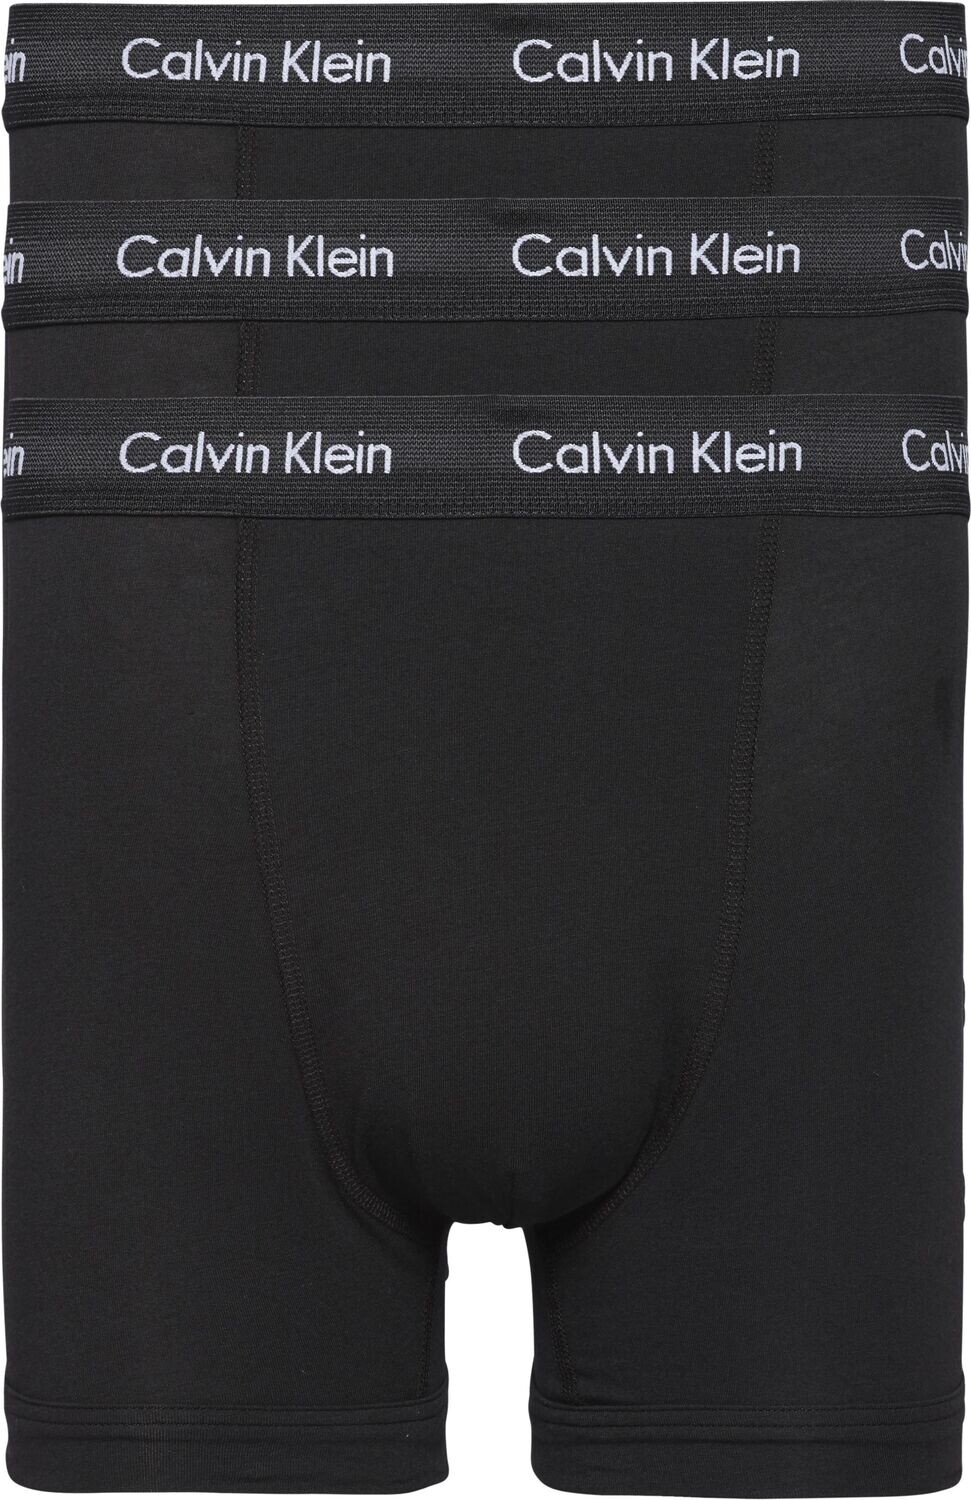 U2662G - Calvin Klein 3Trunks